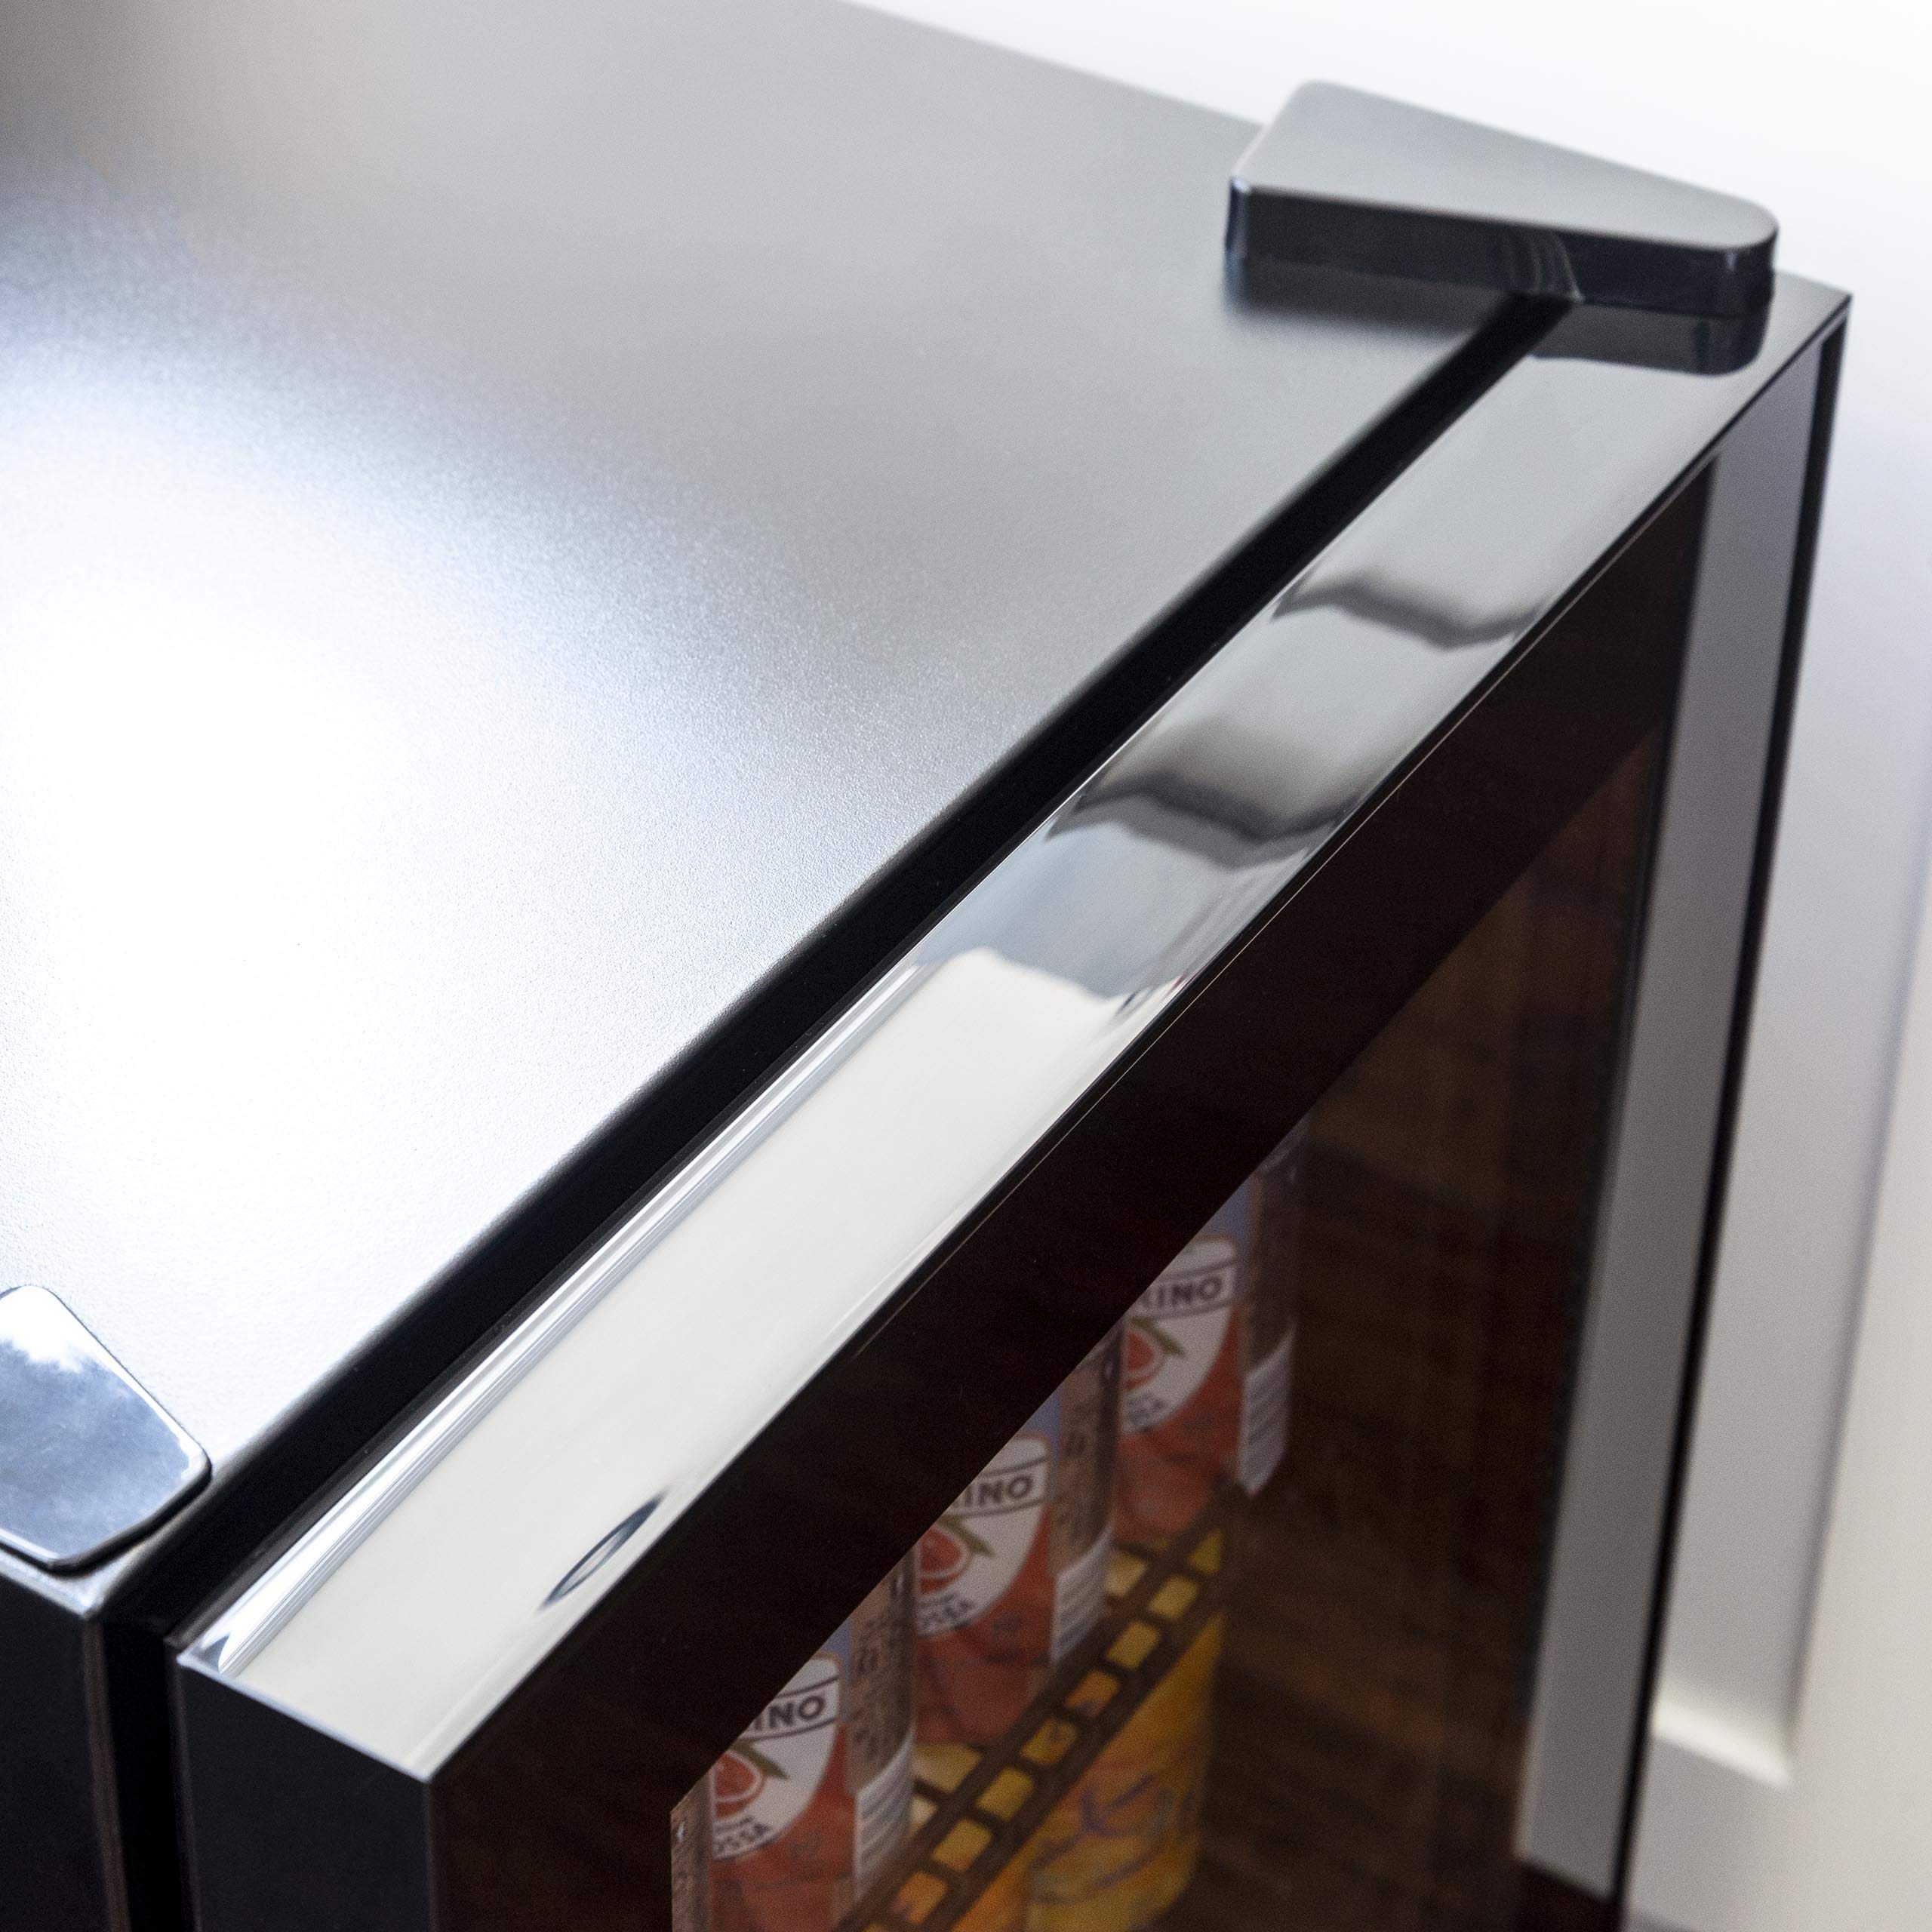 NewAir Beverage Refrigerator Cooler | 126 Cans Free Standing with Right Hinge Glass Door Beverage Cooler | Mini Fridge Beverage Organizer For Beer, Wine, Soda, And Cooler Drinks